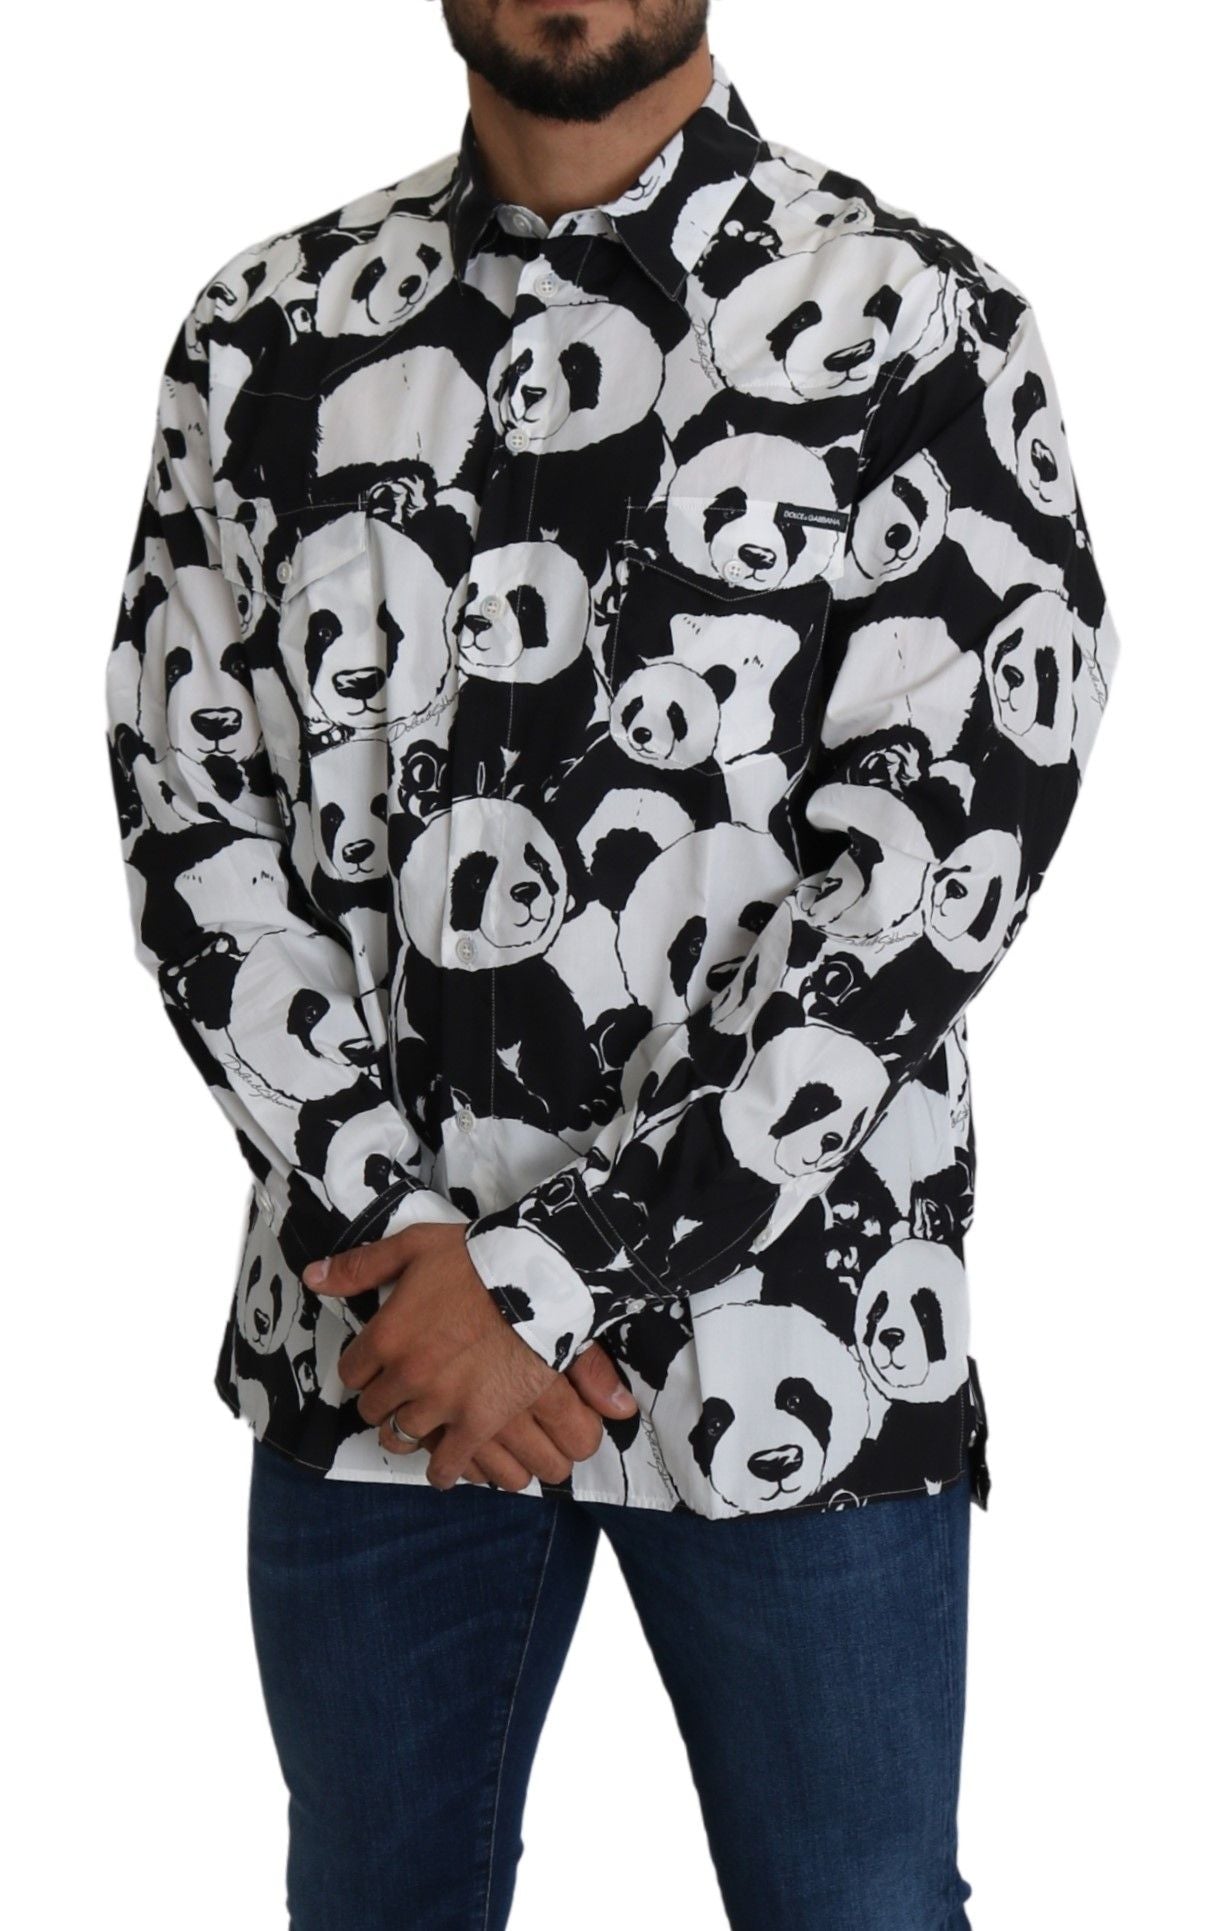 Panda Print Pure Cotton Shirt - Black White